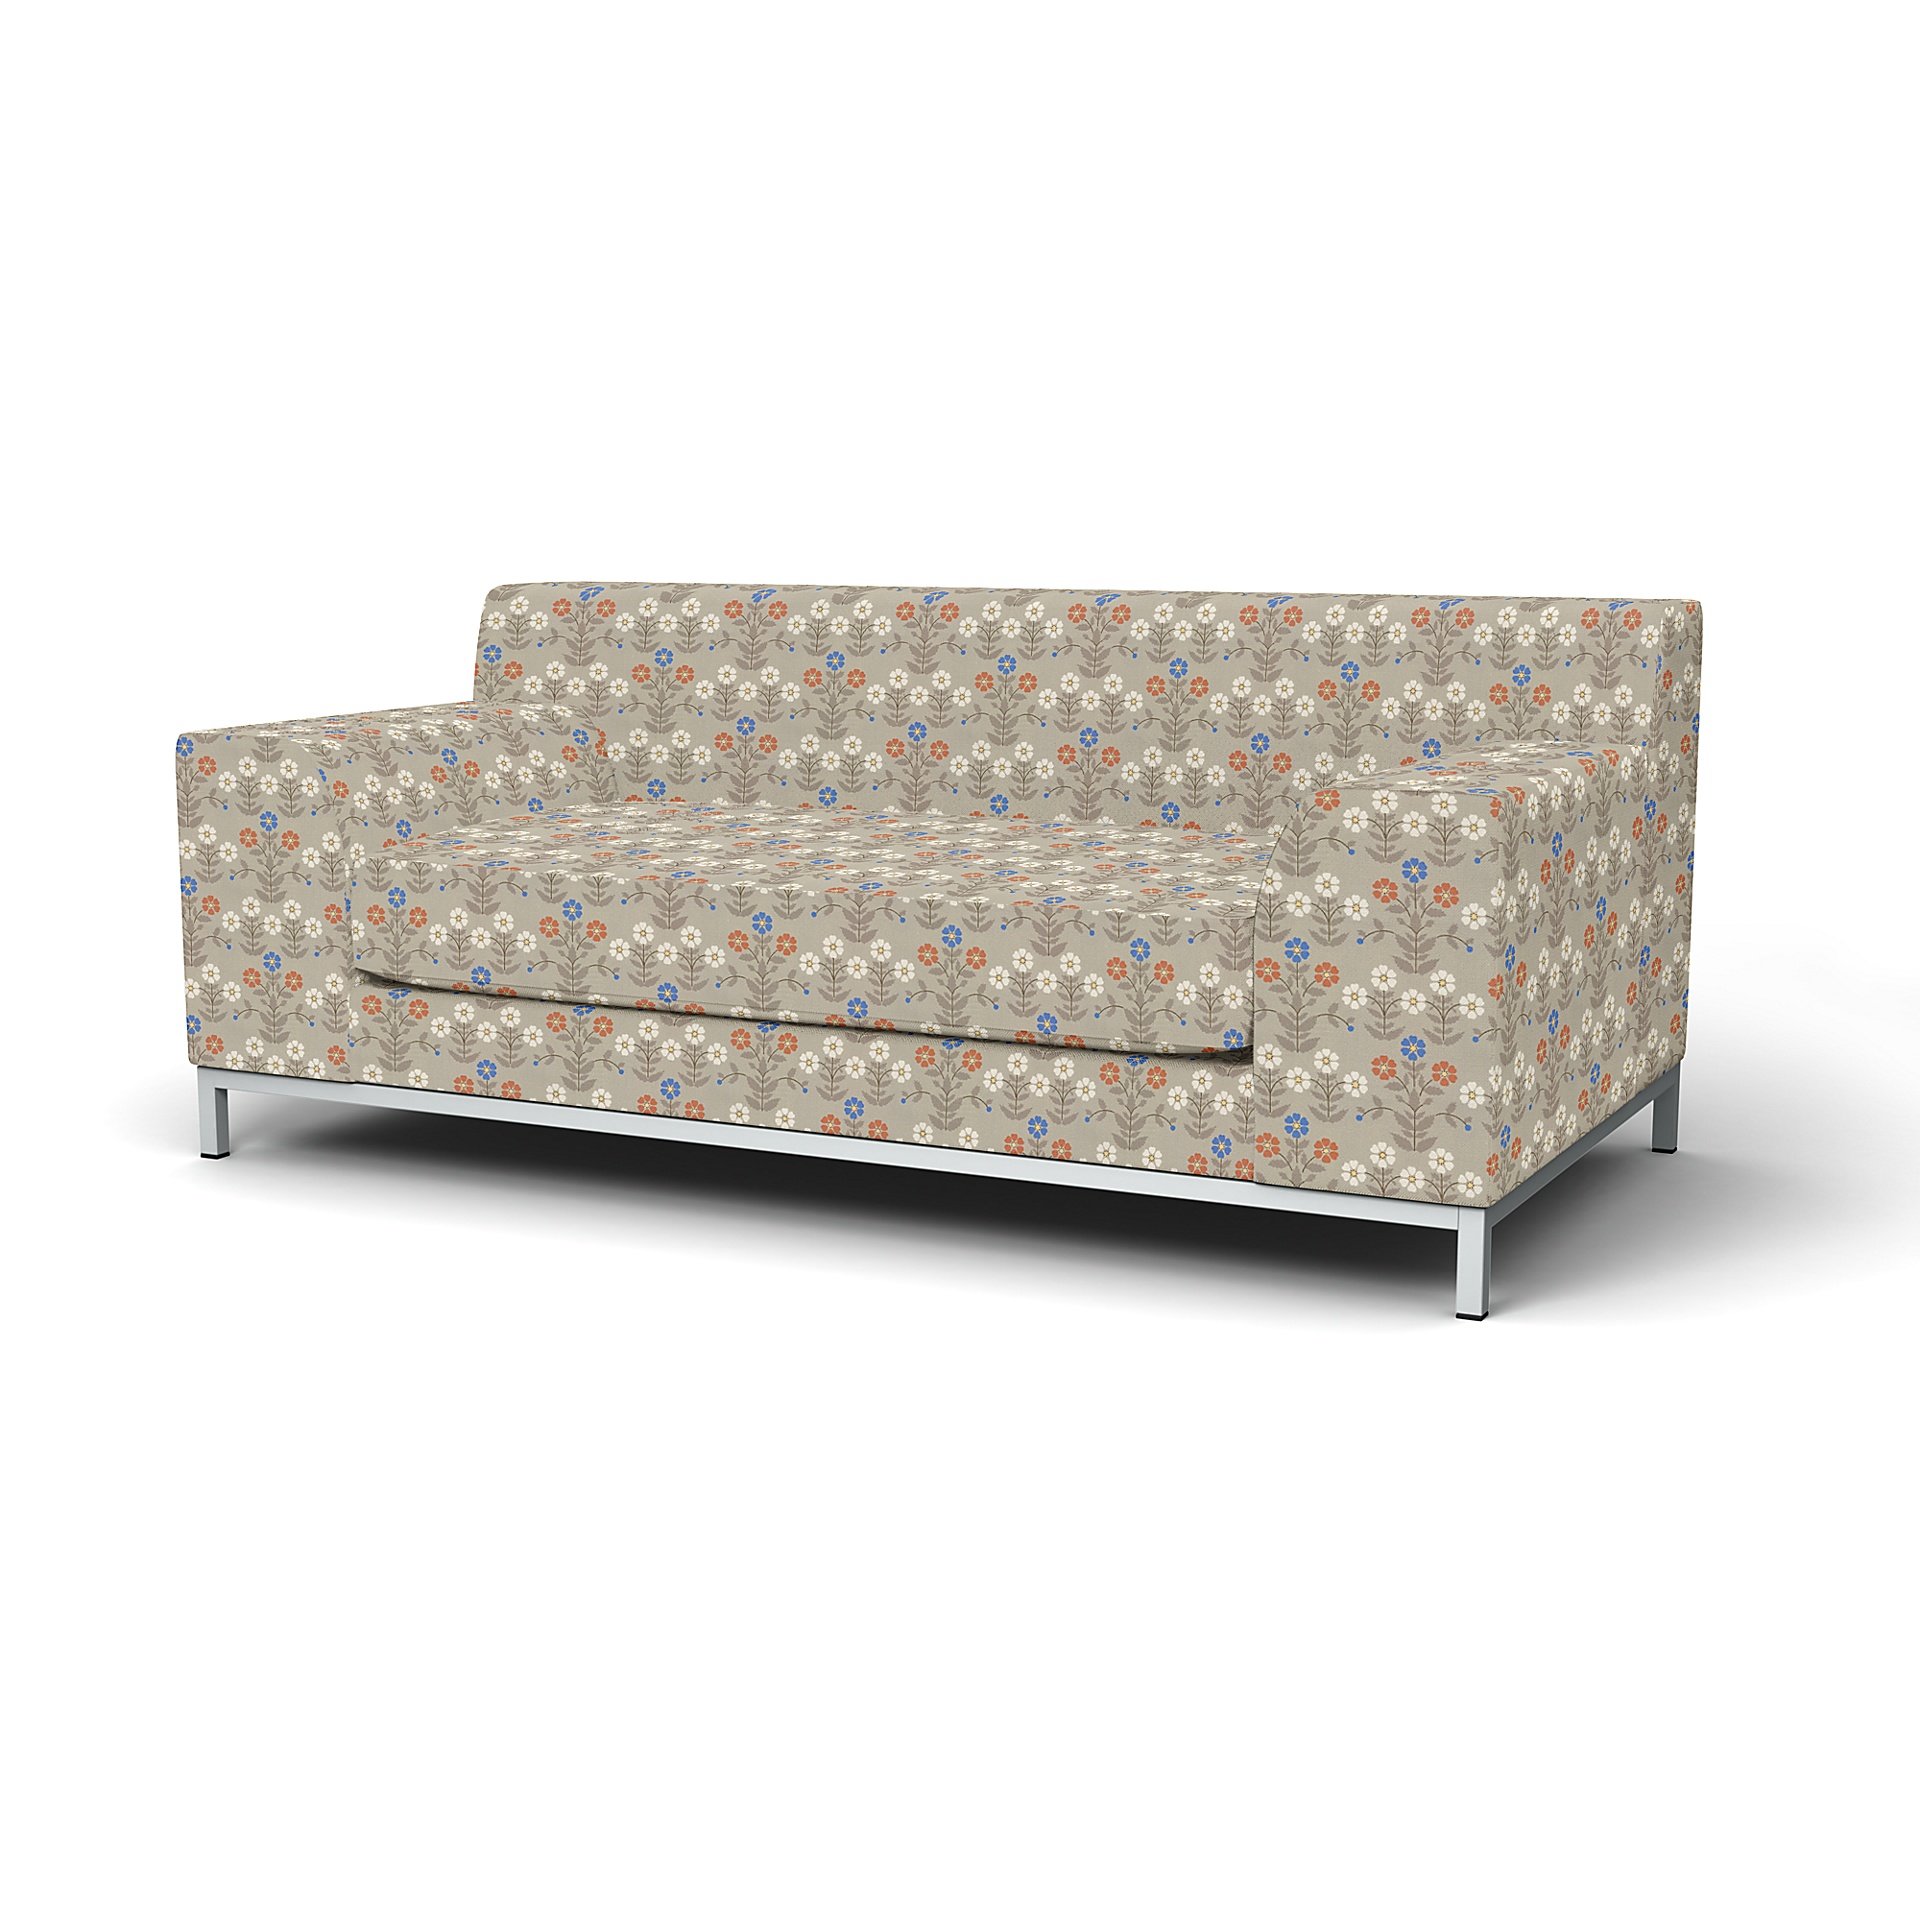 IKEA - Kramfors 2 Seater Sofa Cover, Sippor Blue/Orange, BEMZ x BORASTAPETER COLLECTION - Bemz